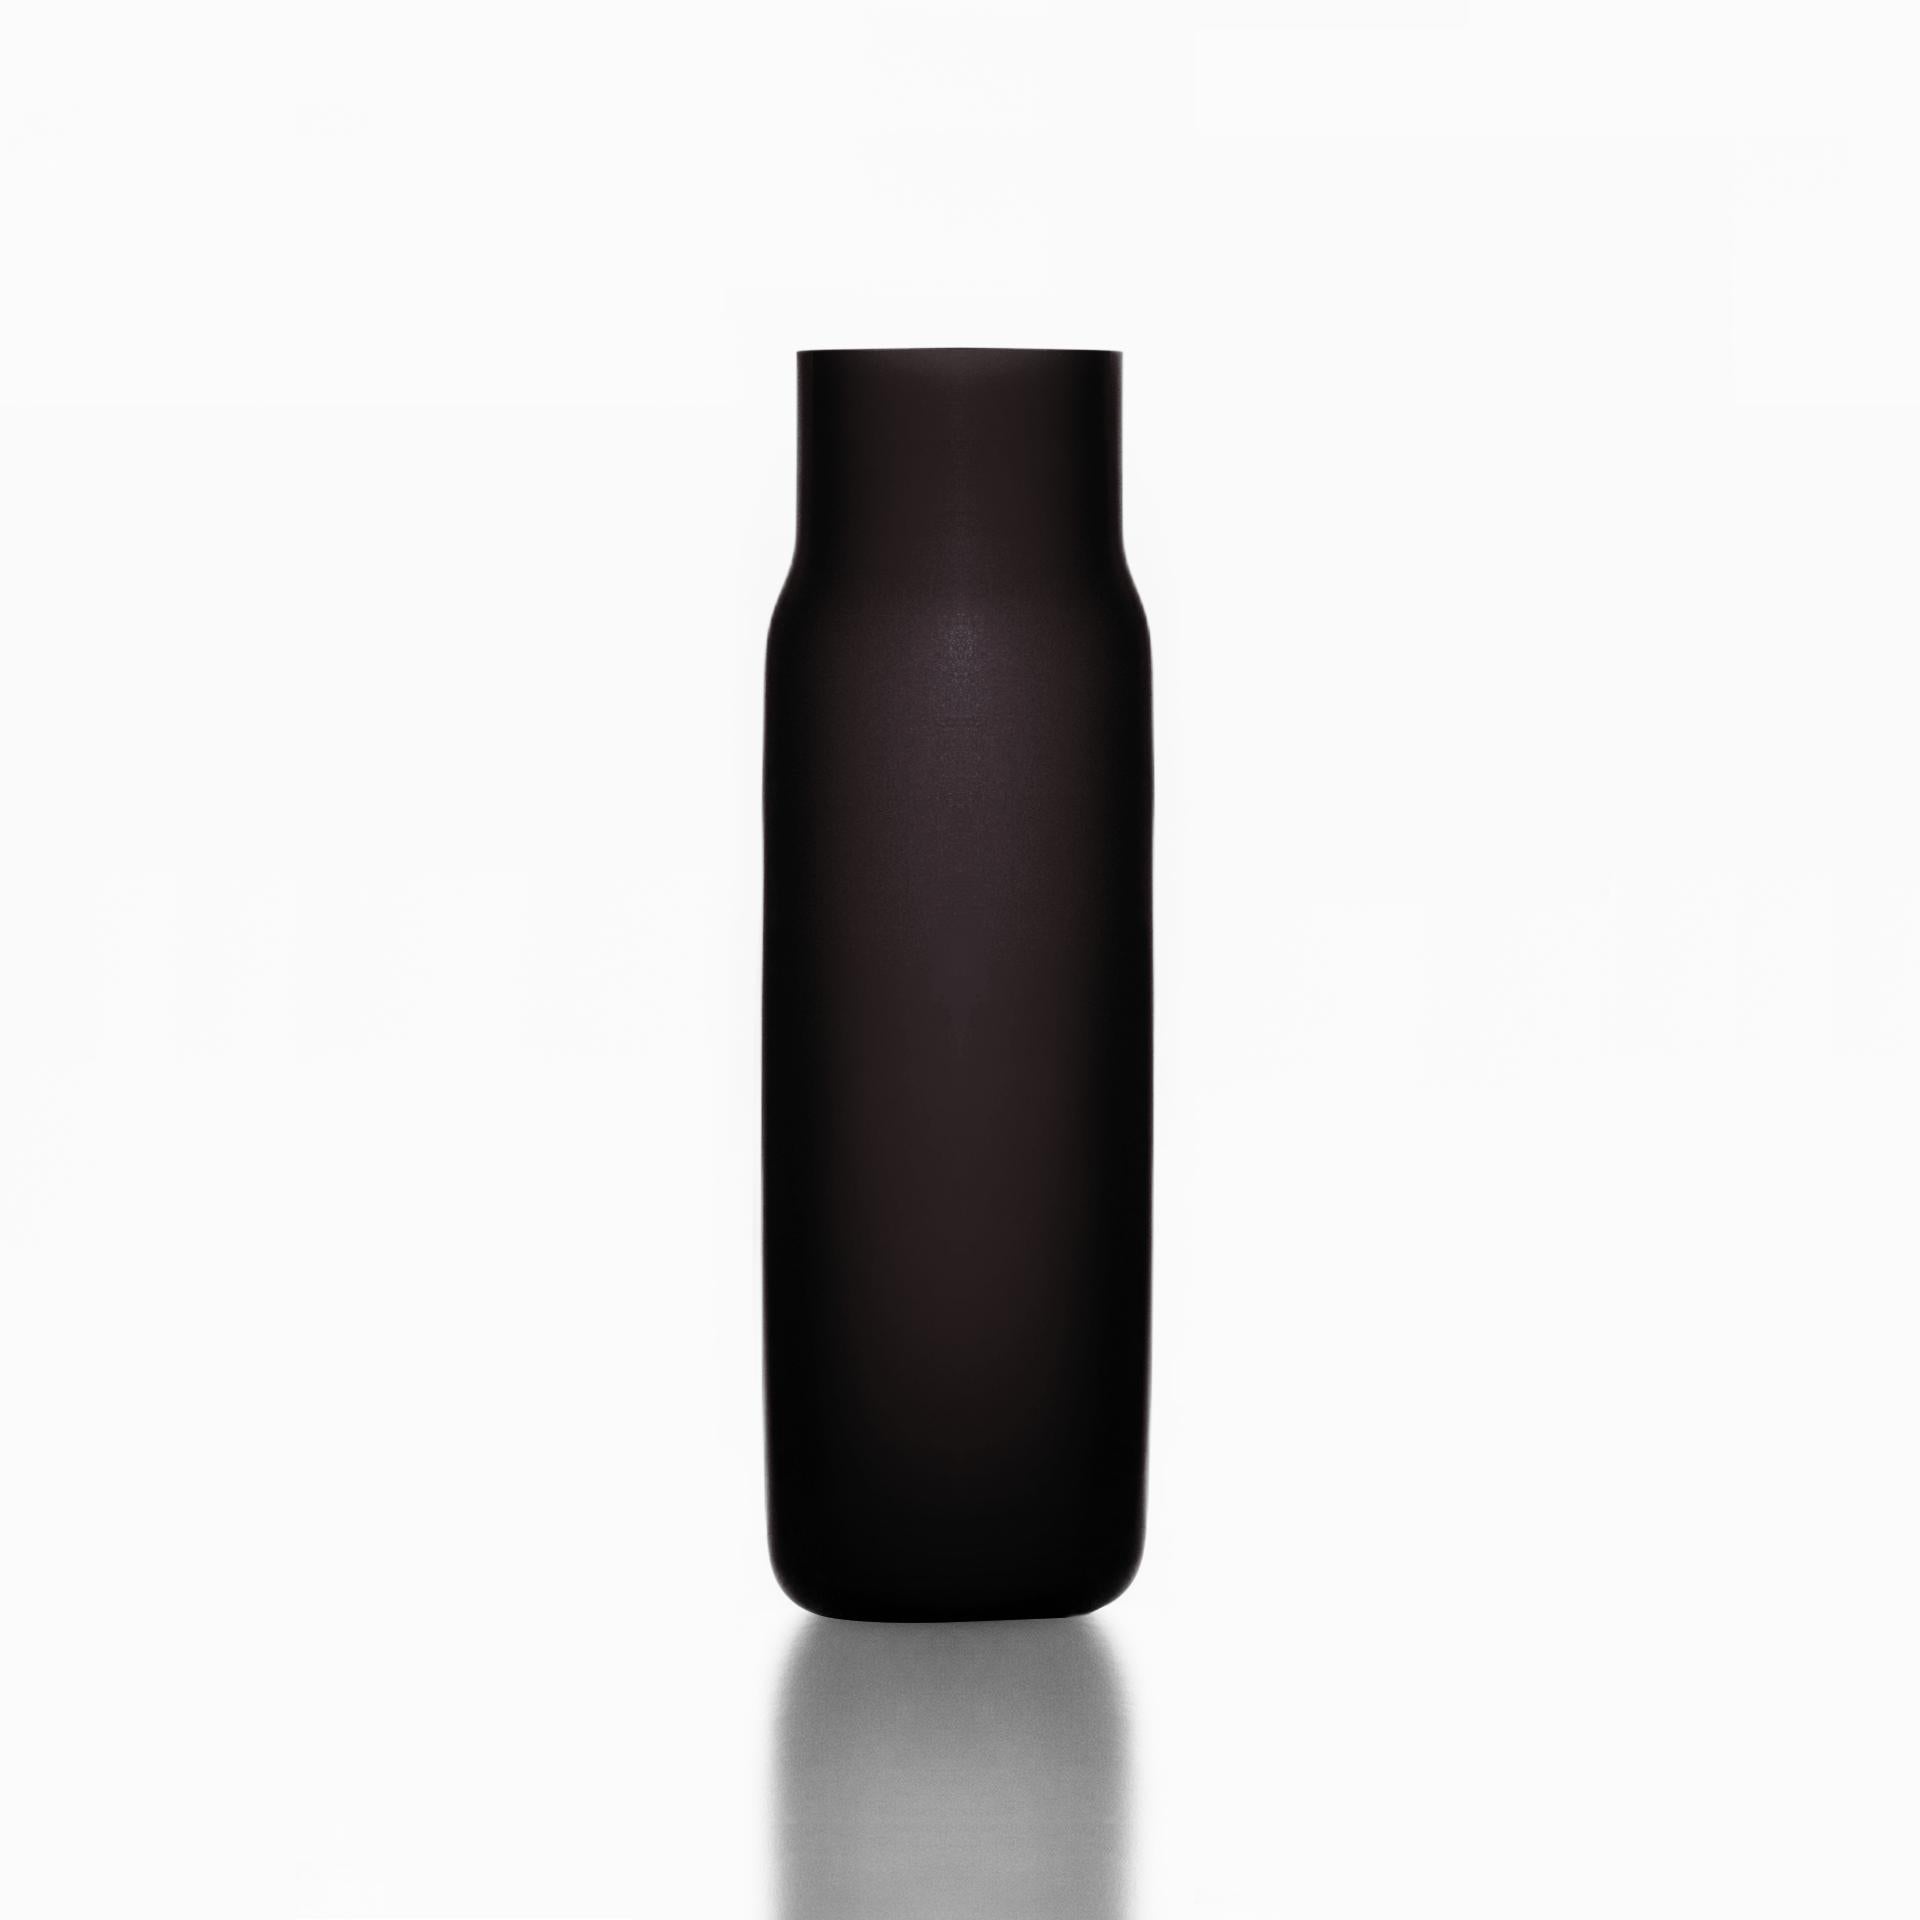 Tall black bandaska matte vase by Dechem Studio.
Dimensions: D 9 x H 31 cm.
Materials: glass.
Available in 4 sizes: D15 x H25/ D18 x H24/ D9 x W31/ D22 x H33 cm.
Available in black, uranium yellow, dark blue.

Hand-blown into beech wood mold,